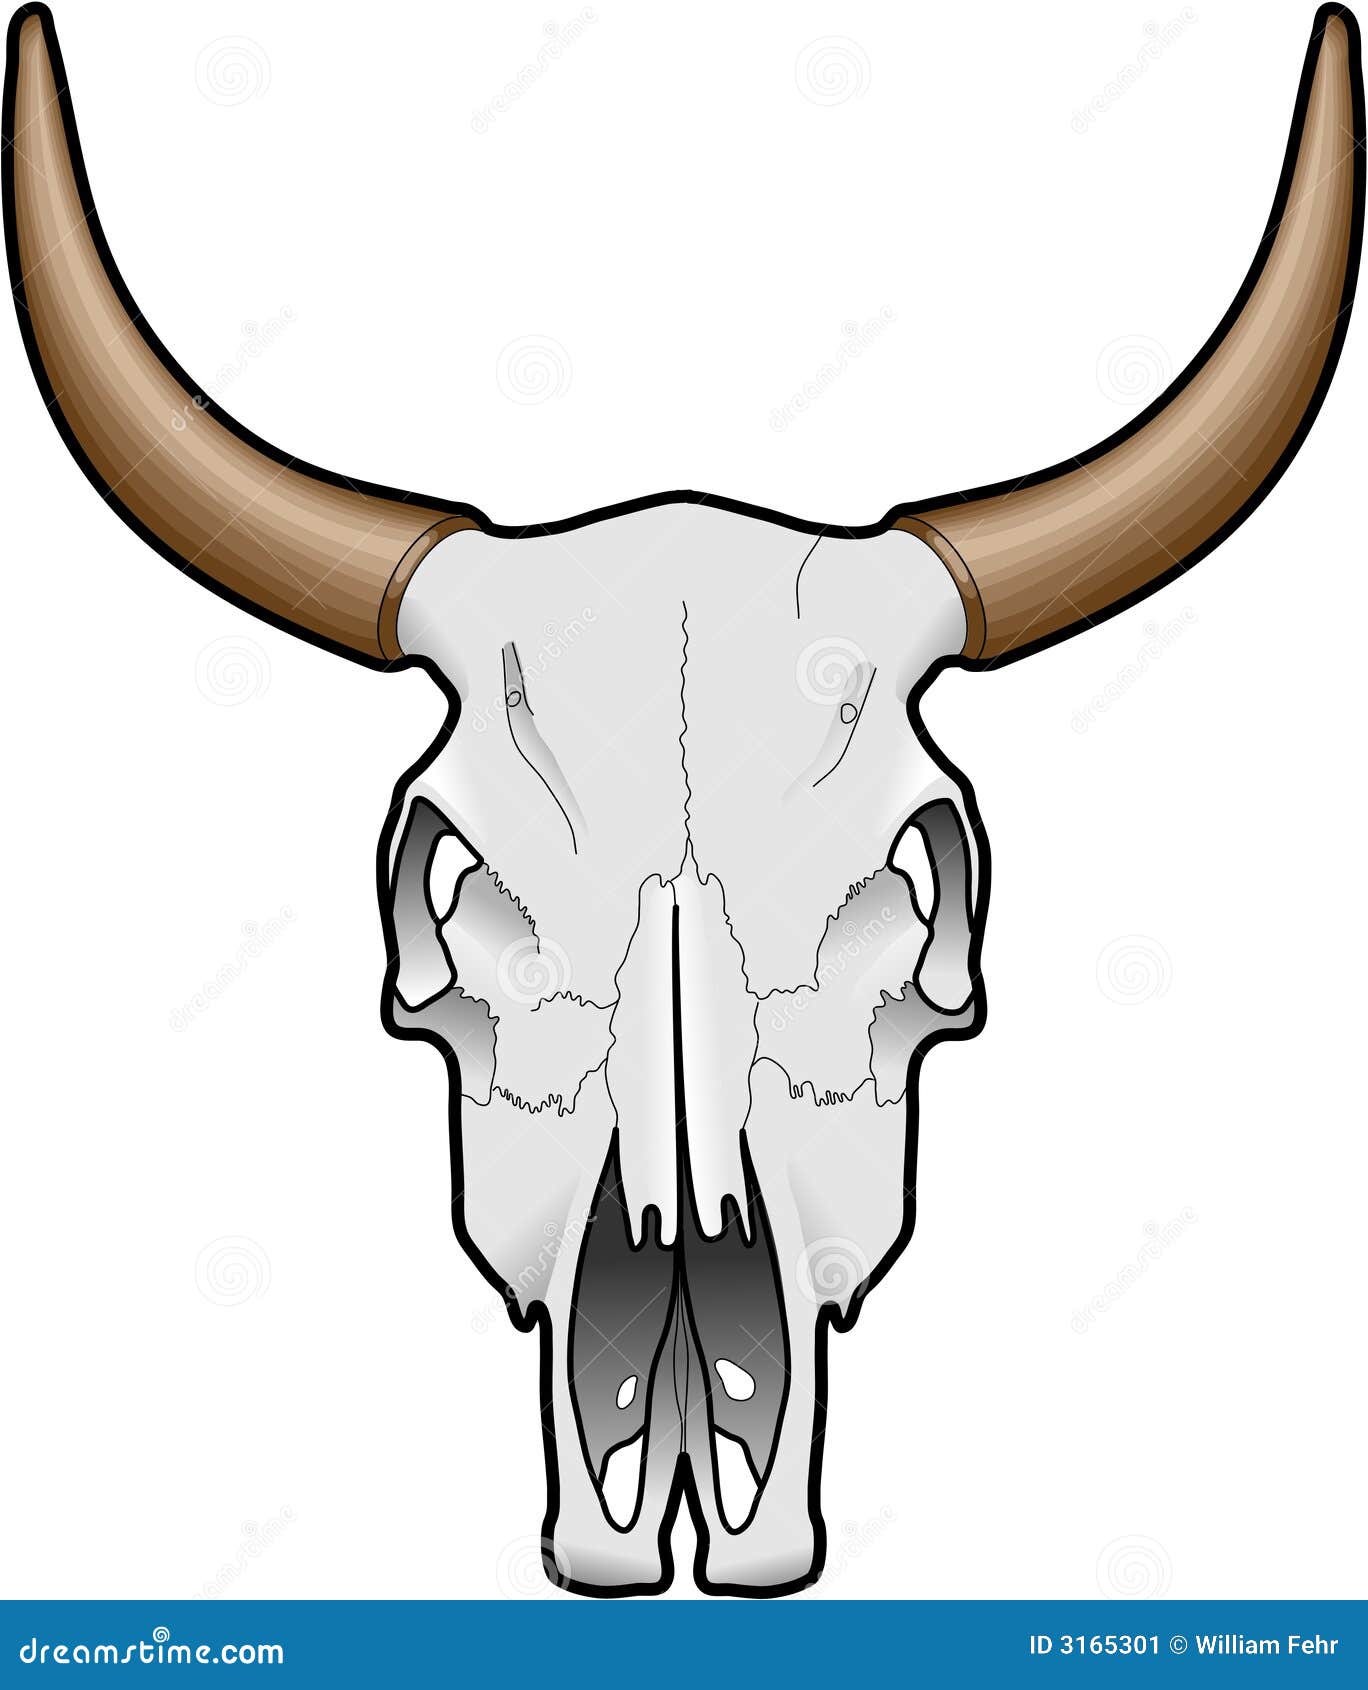 clip art cow skull - photo #39